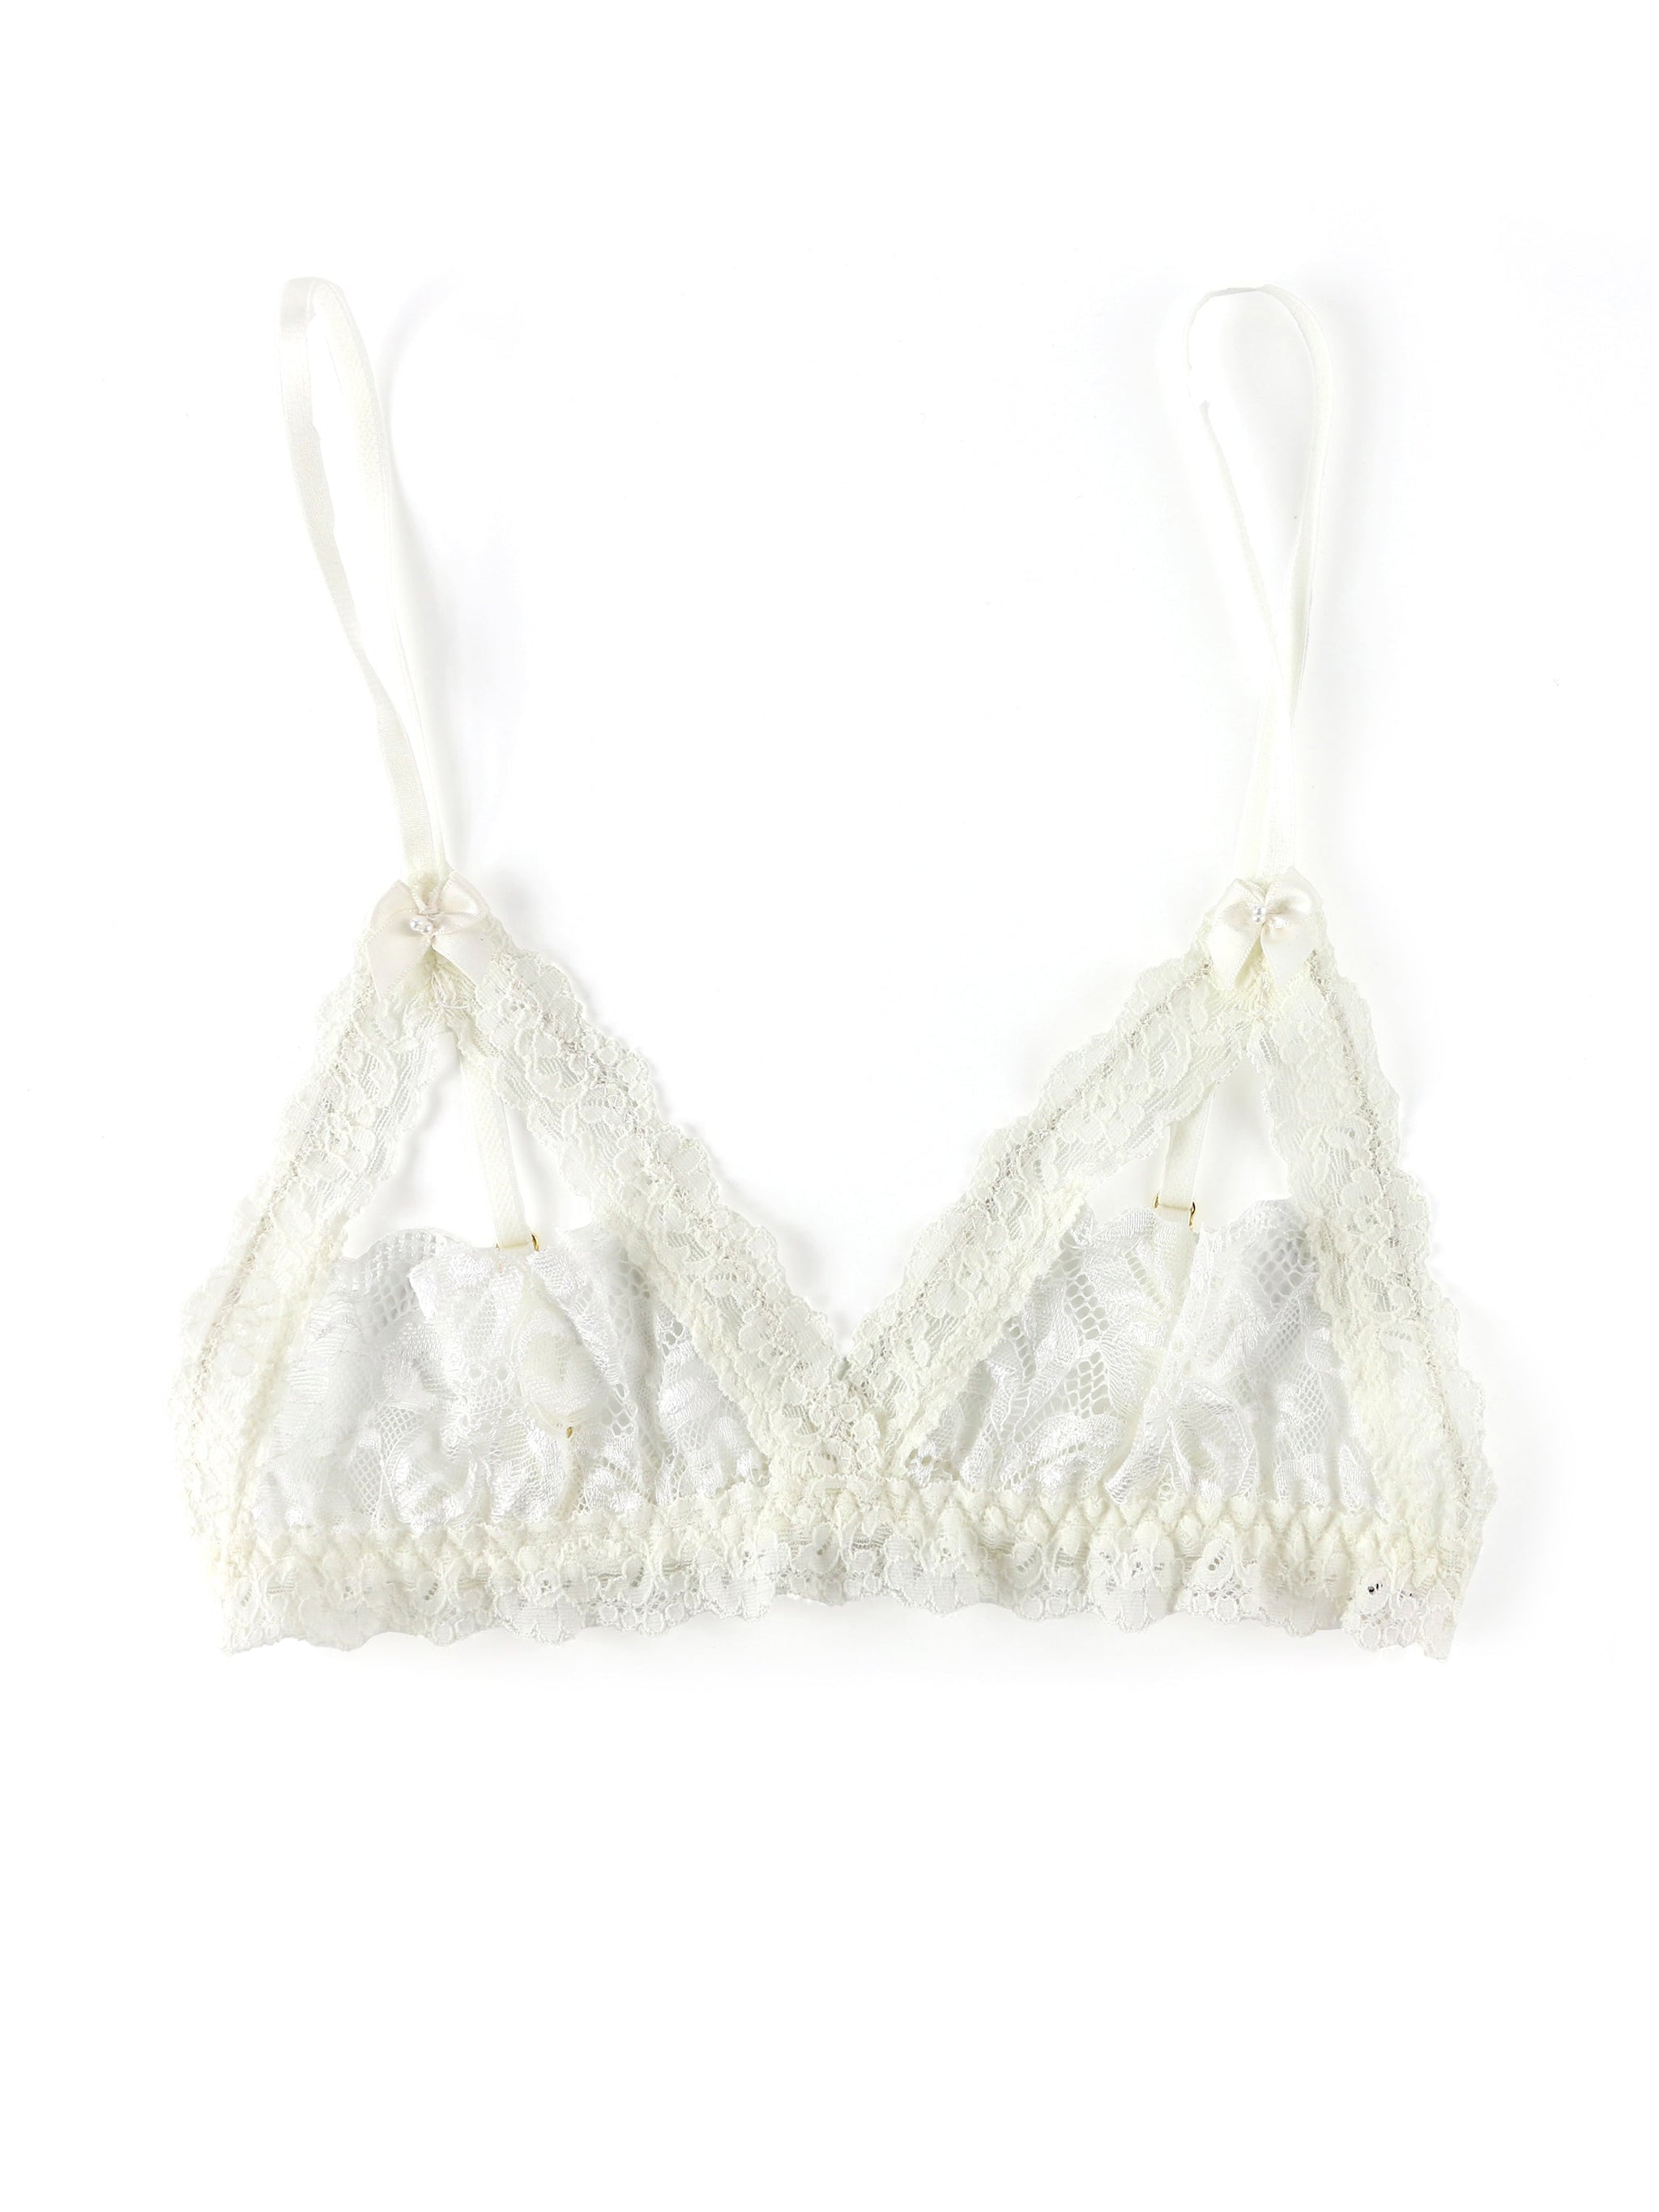 Antona Bra & Panty Set❤ Perfect for bridal & festive wear!🥰 Antona push-up  bra set has high strap details & matching lace panty. T